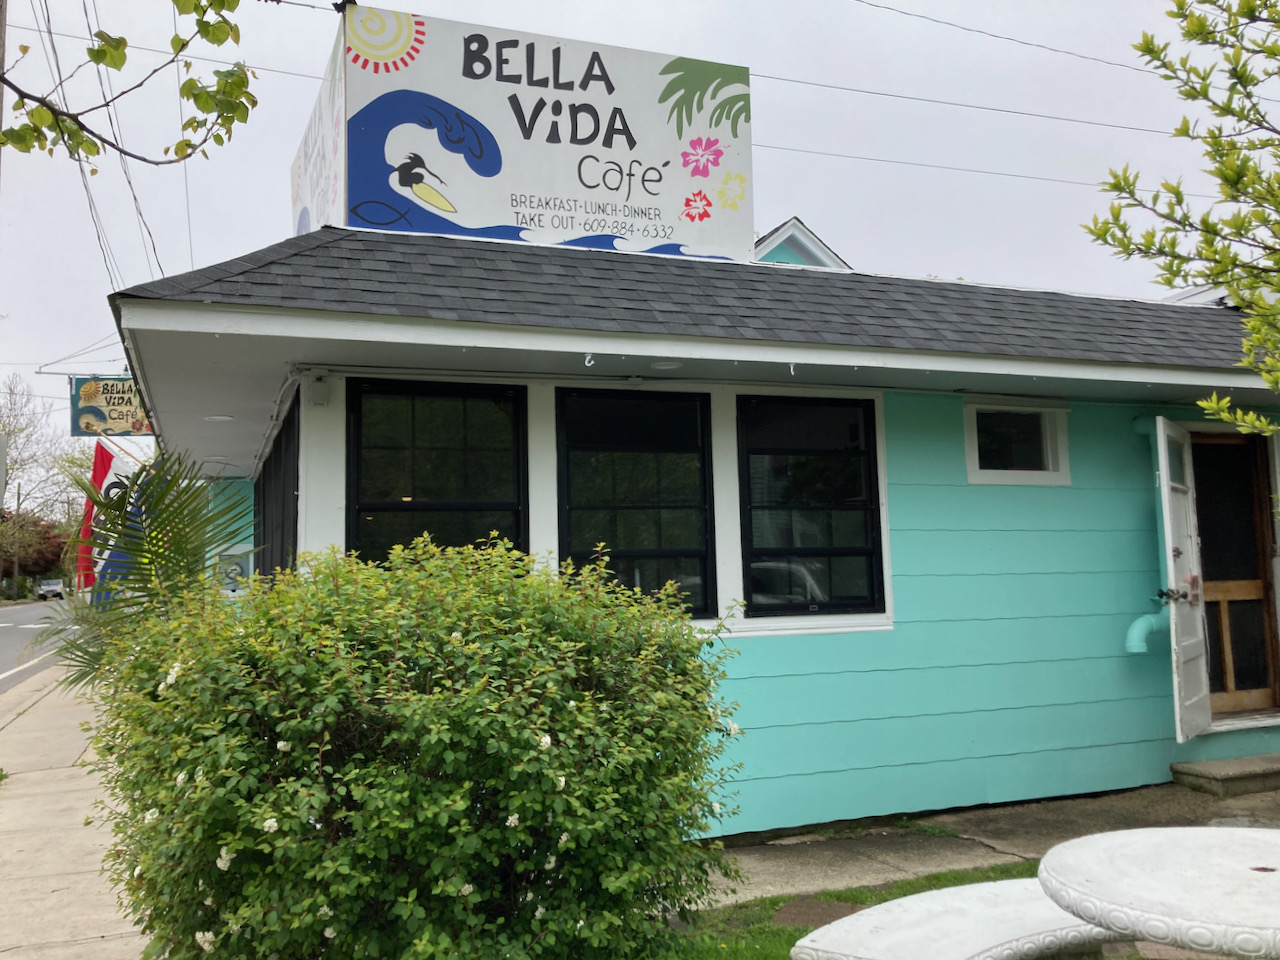 Exterior of Bella Vida Cafe.